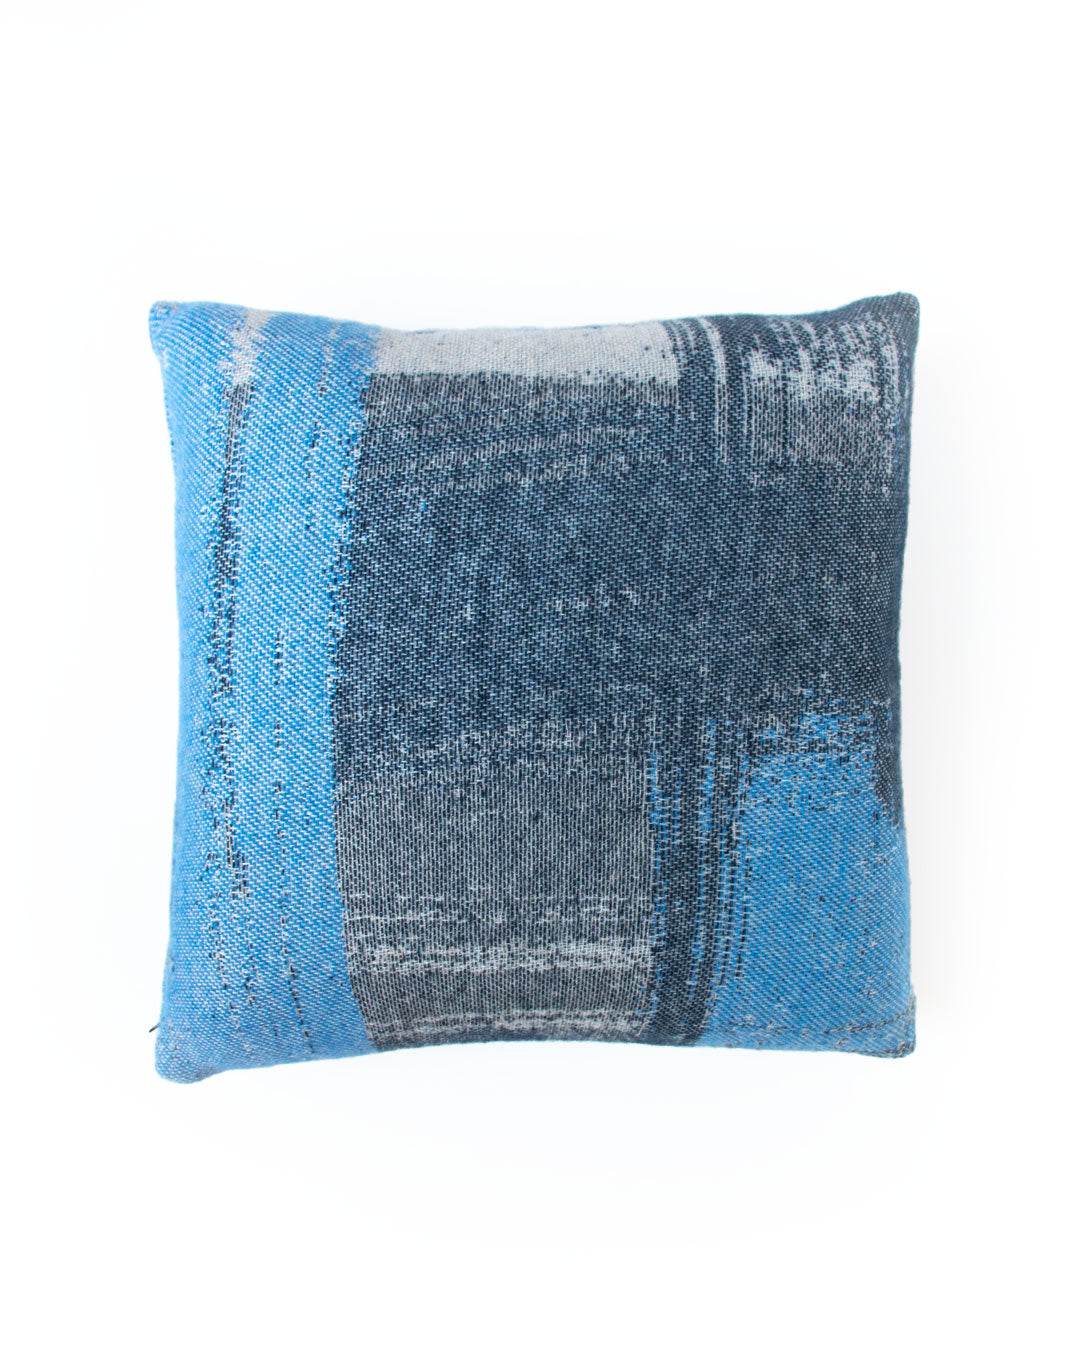 Graffiti Blue Cushion